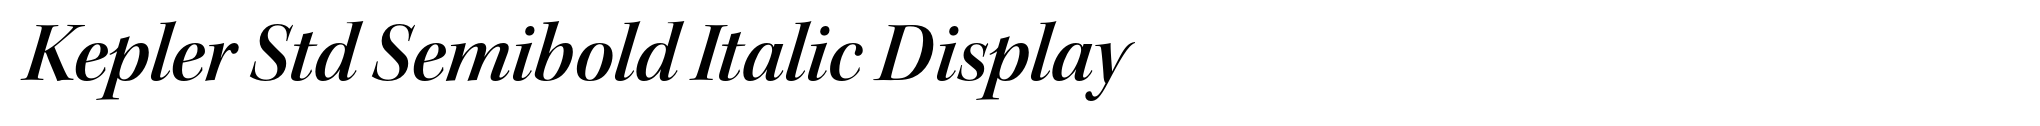 Kepler Std Semibold Italic Display image